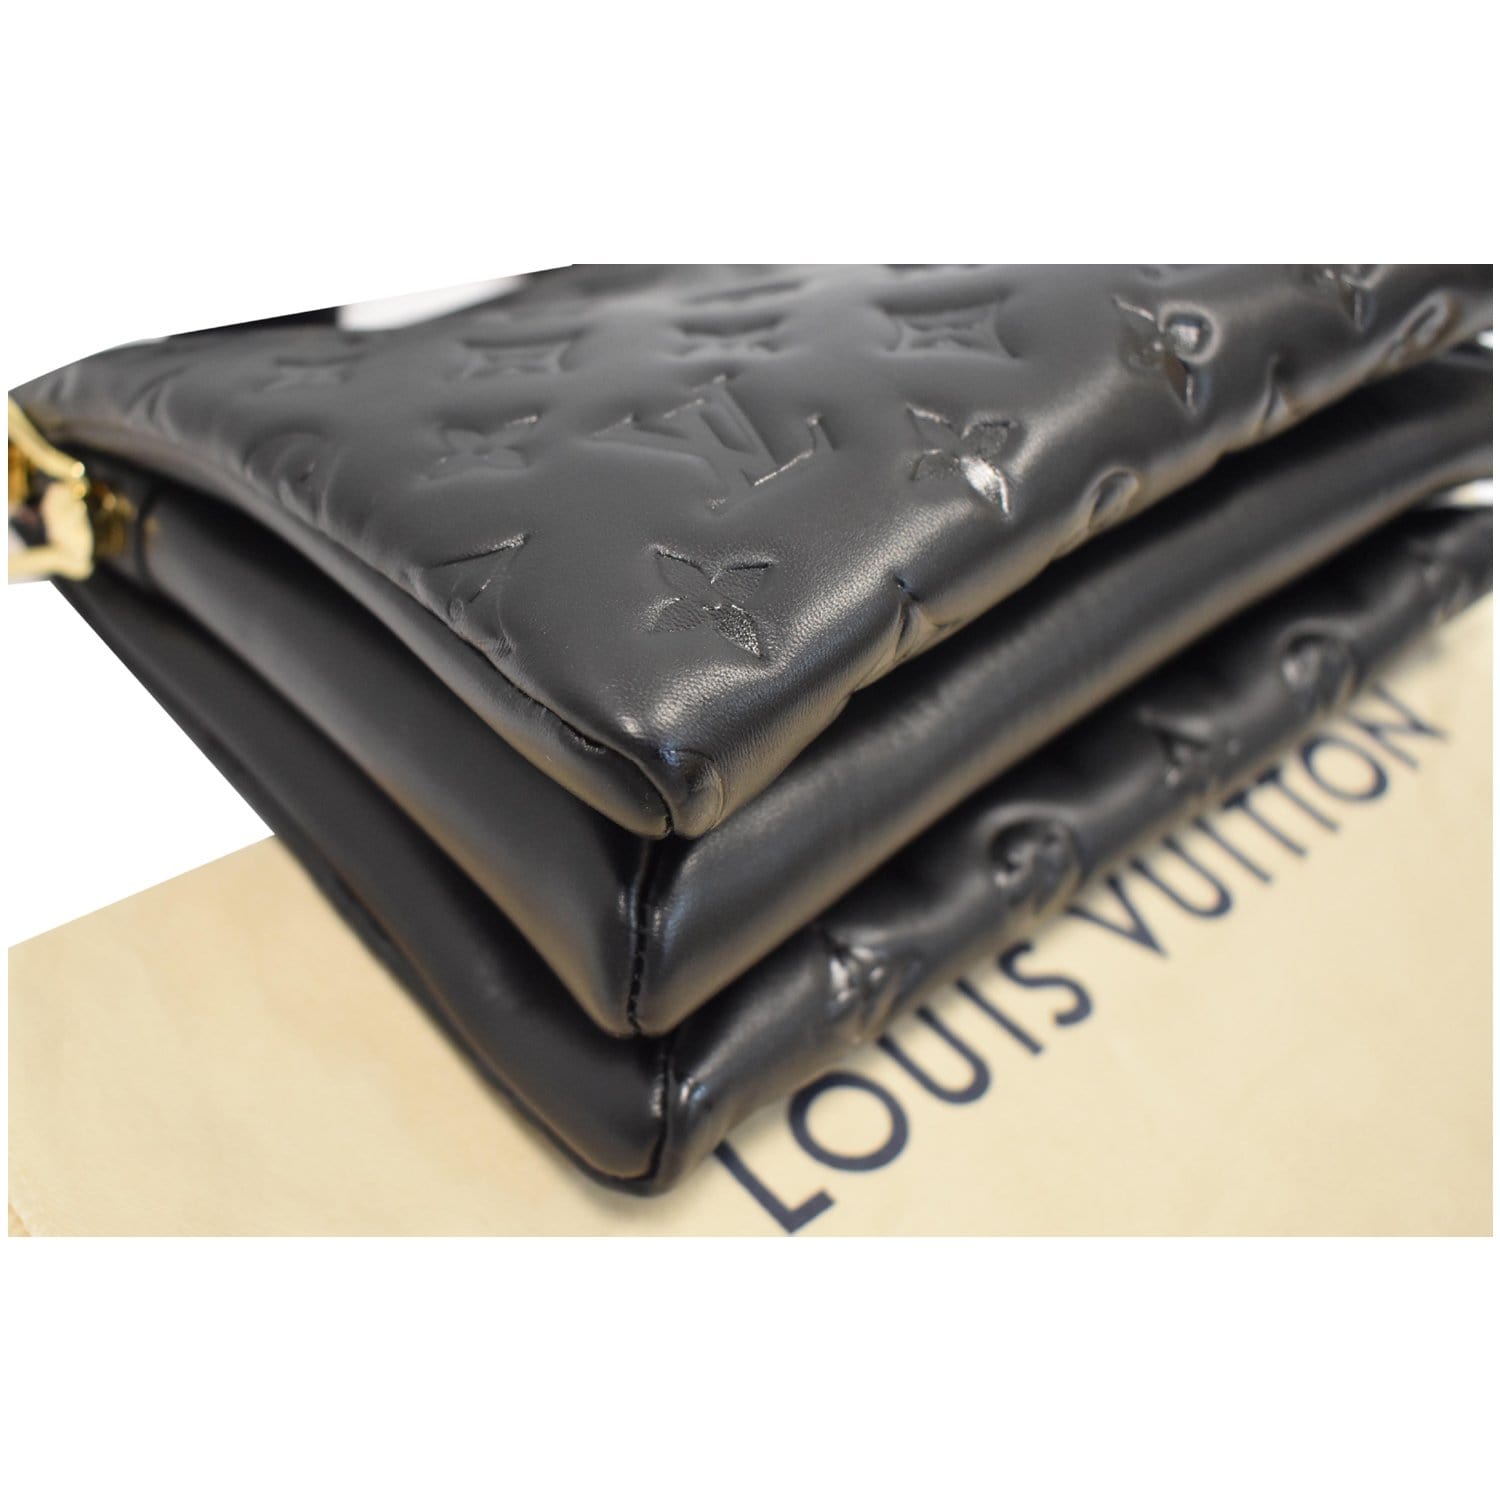 black lv embossed bag